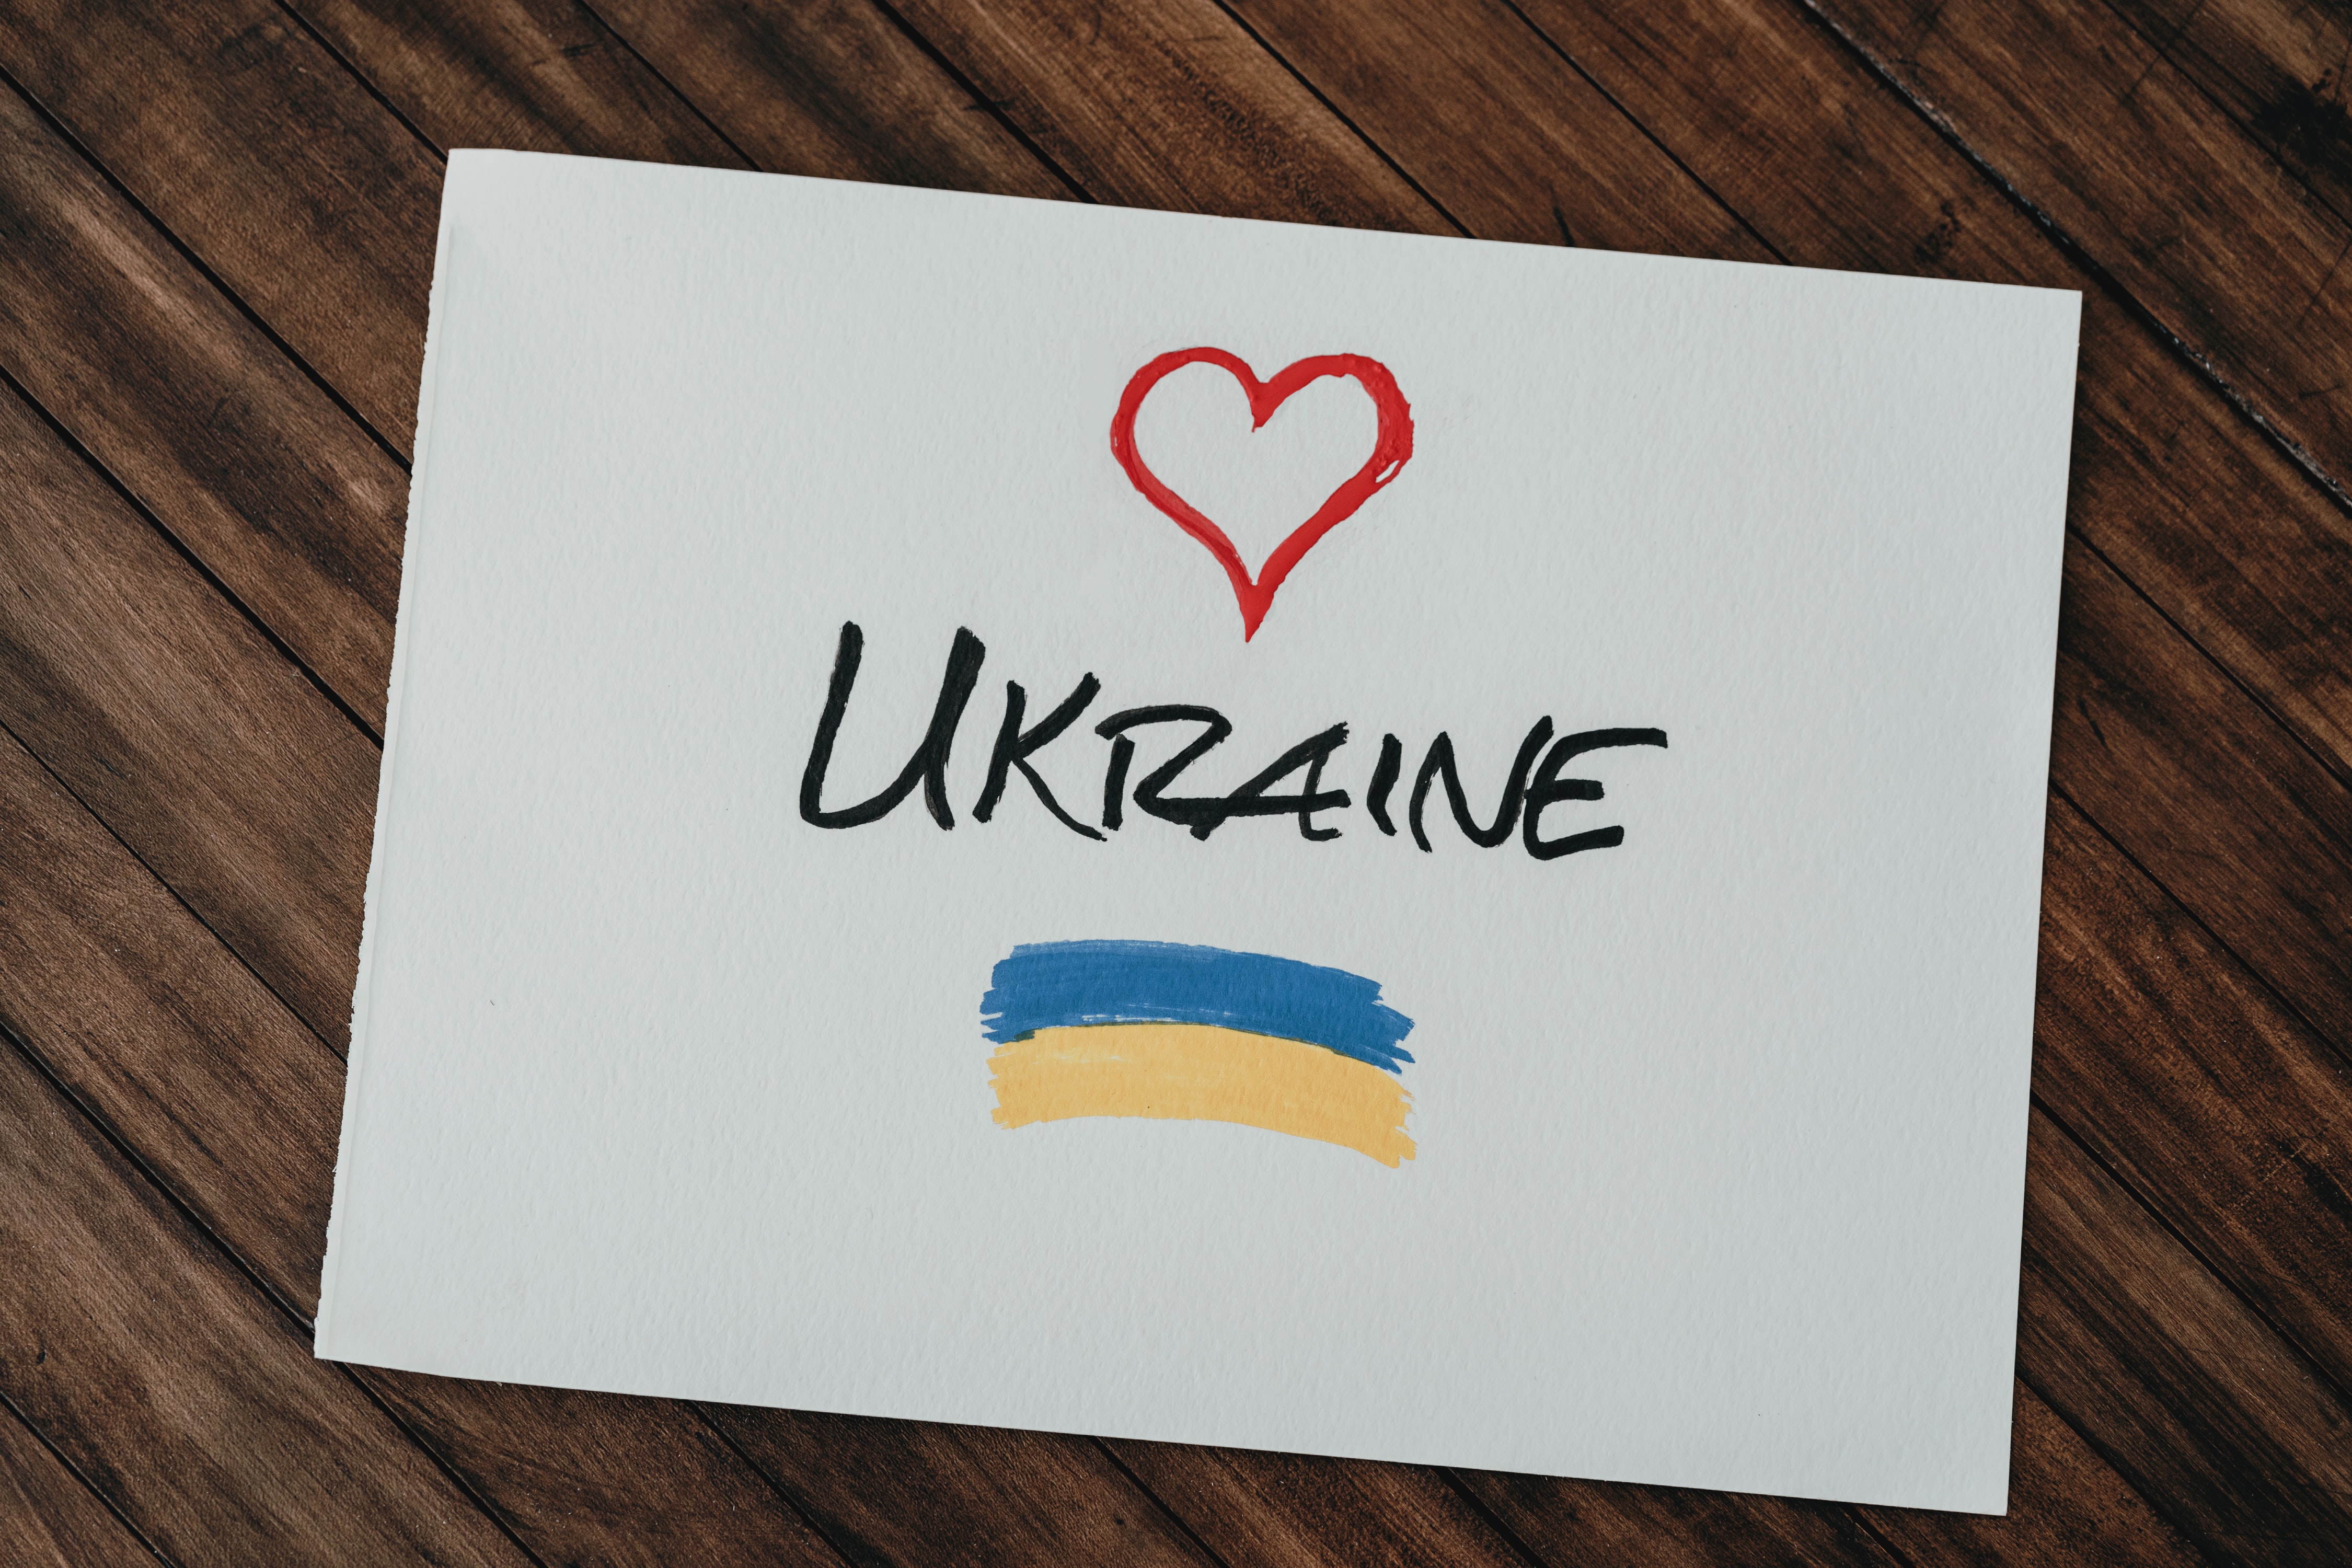 Message of support to Ukraine